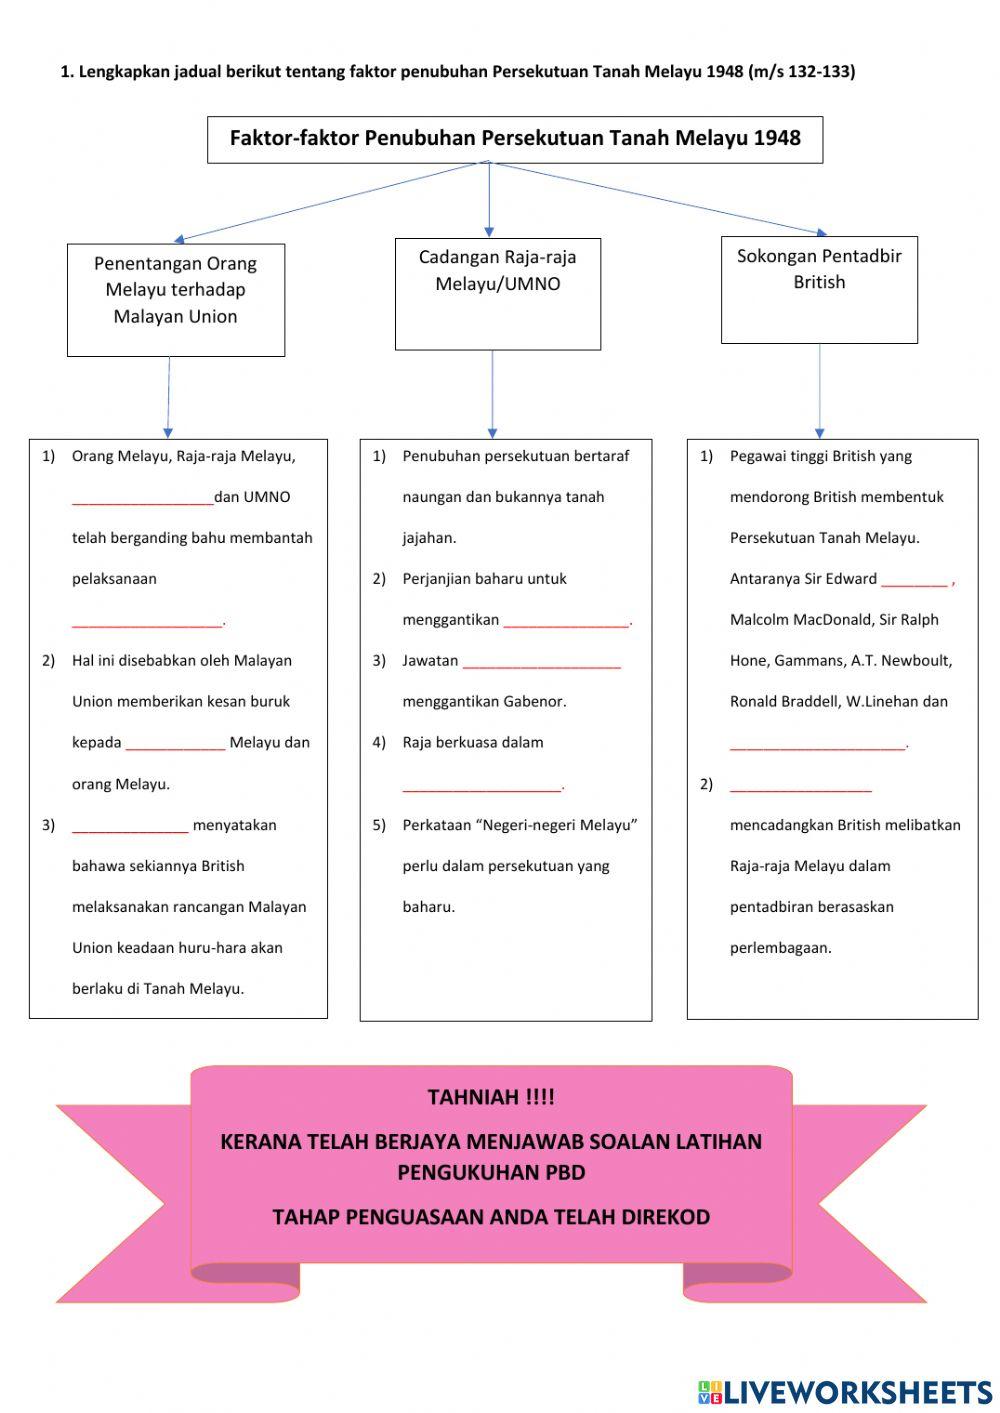 Subtajuk 5.2 : Faktor Penubuhan Persekutuan Tanah Melayu 1948